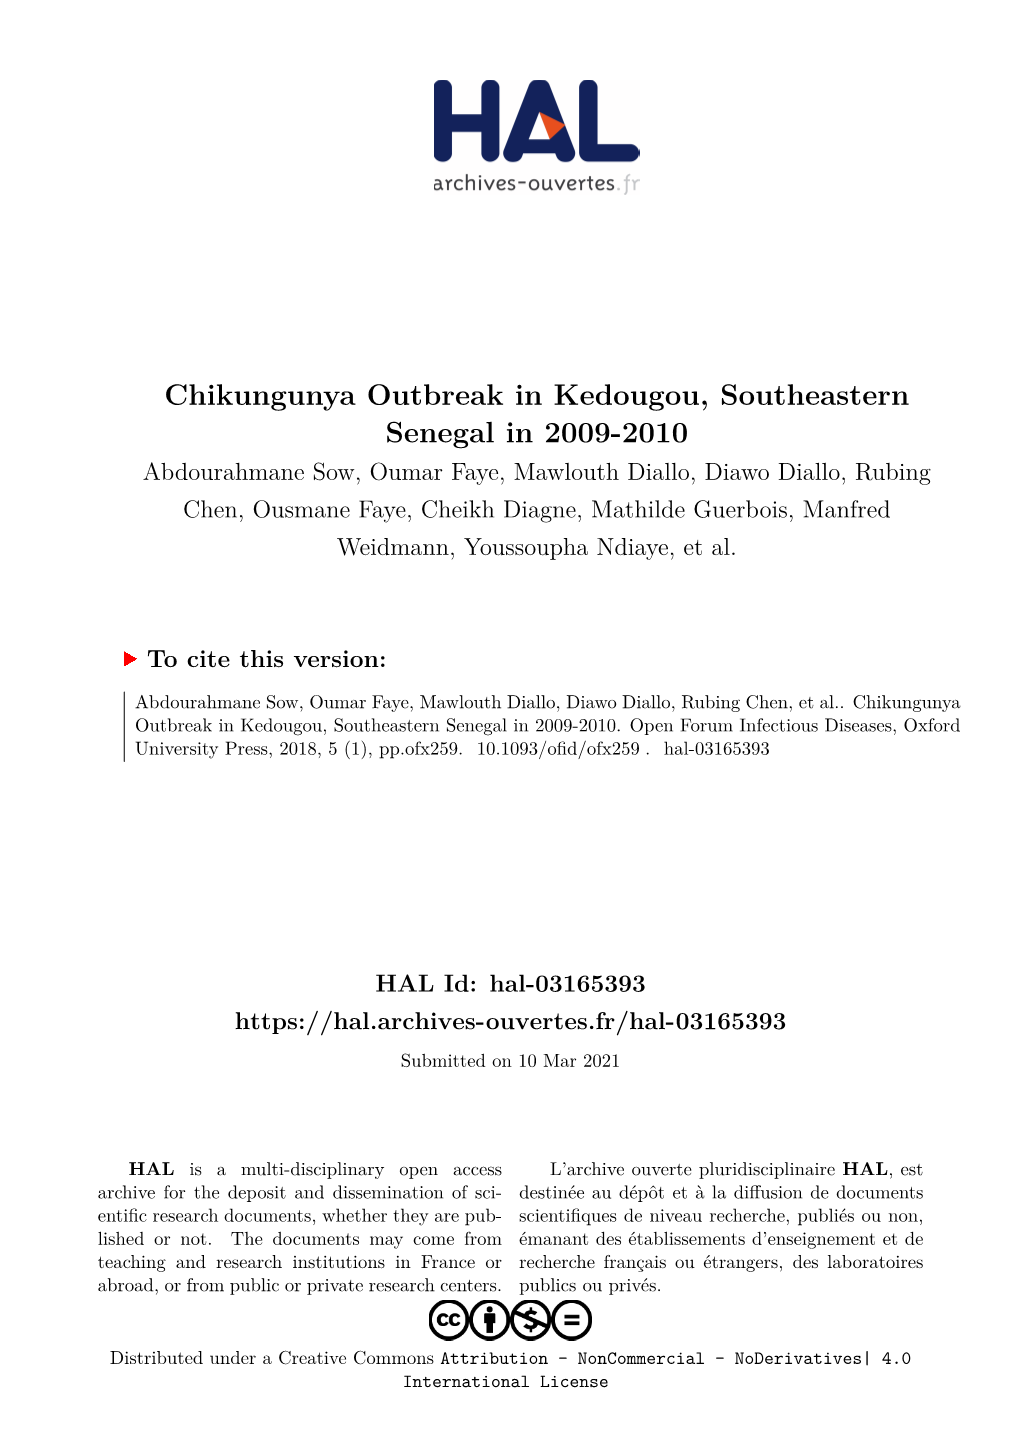 Chikungunya Outbreak in Kedougou, Southeastern Senegal in 2009-2010